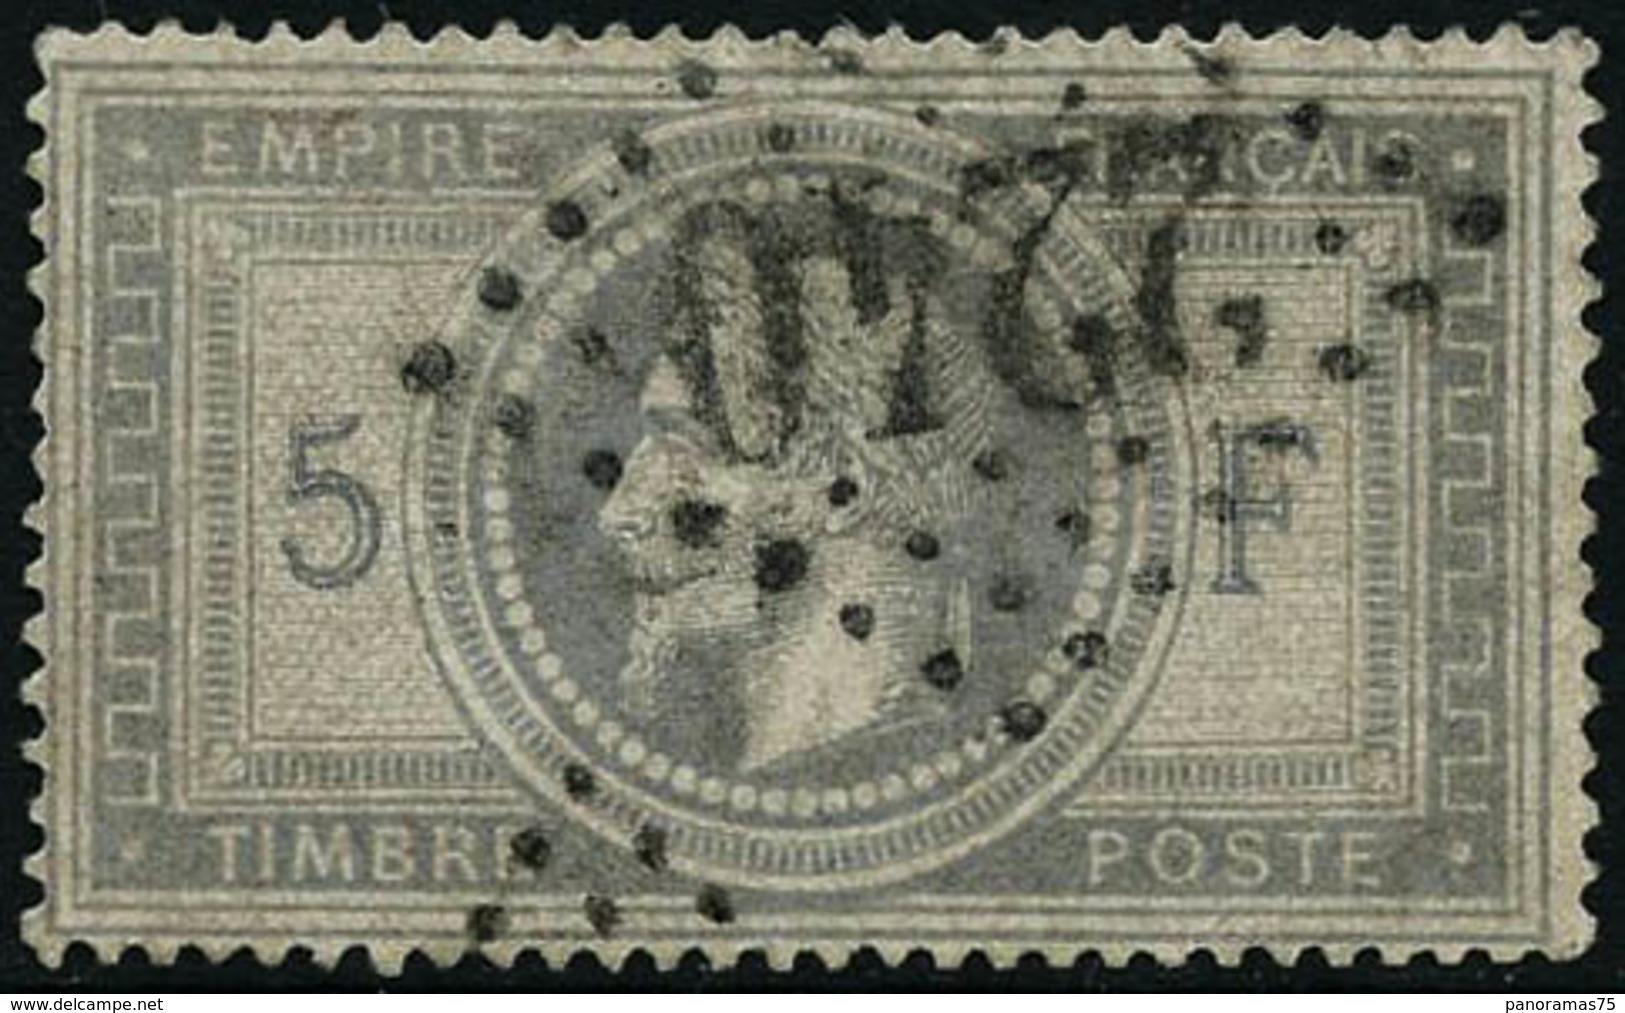 Oblit. N°33 5F Empire - TB - 1863-1870 Napoleon III With Laurels